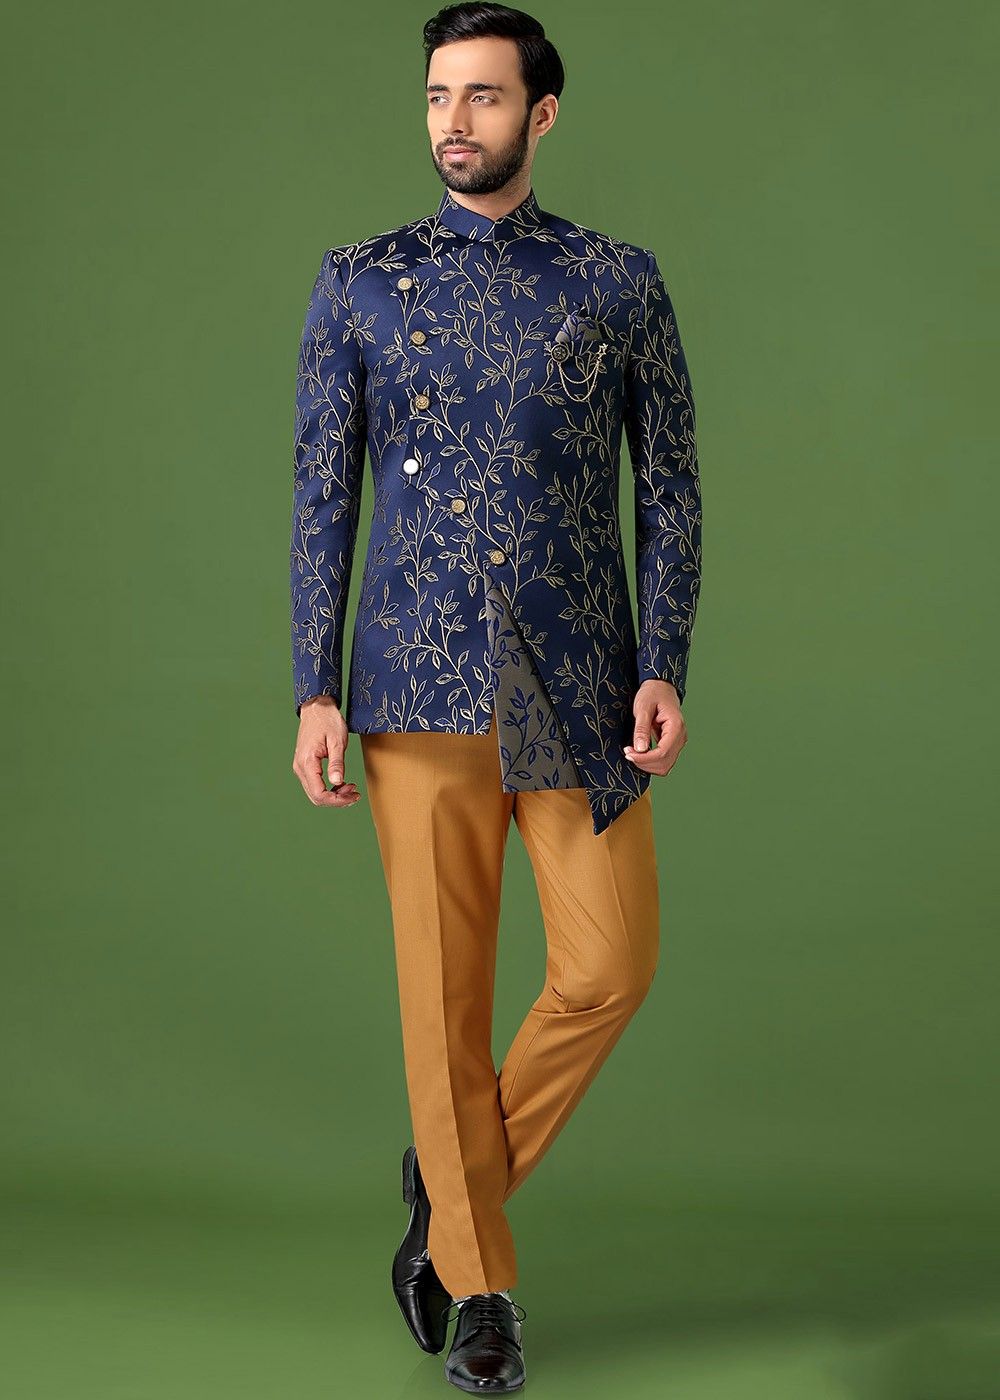 Buy Breakthrough® Breeches for Men | Jodhpuri pants | Polo Pants | Ethnic  wear(Maroon, 40) at Amazon.in